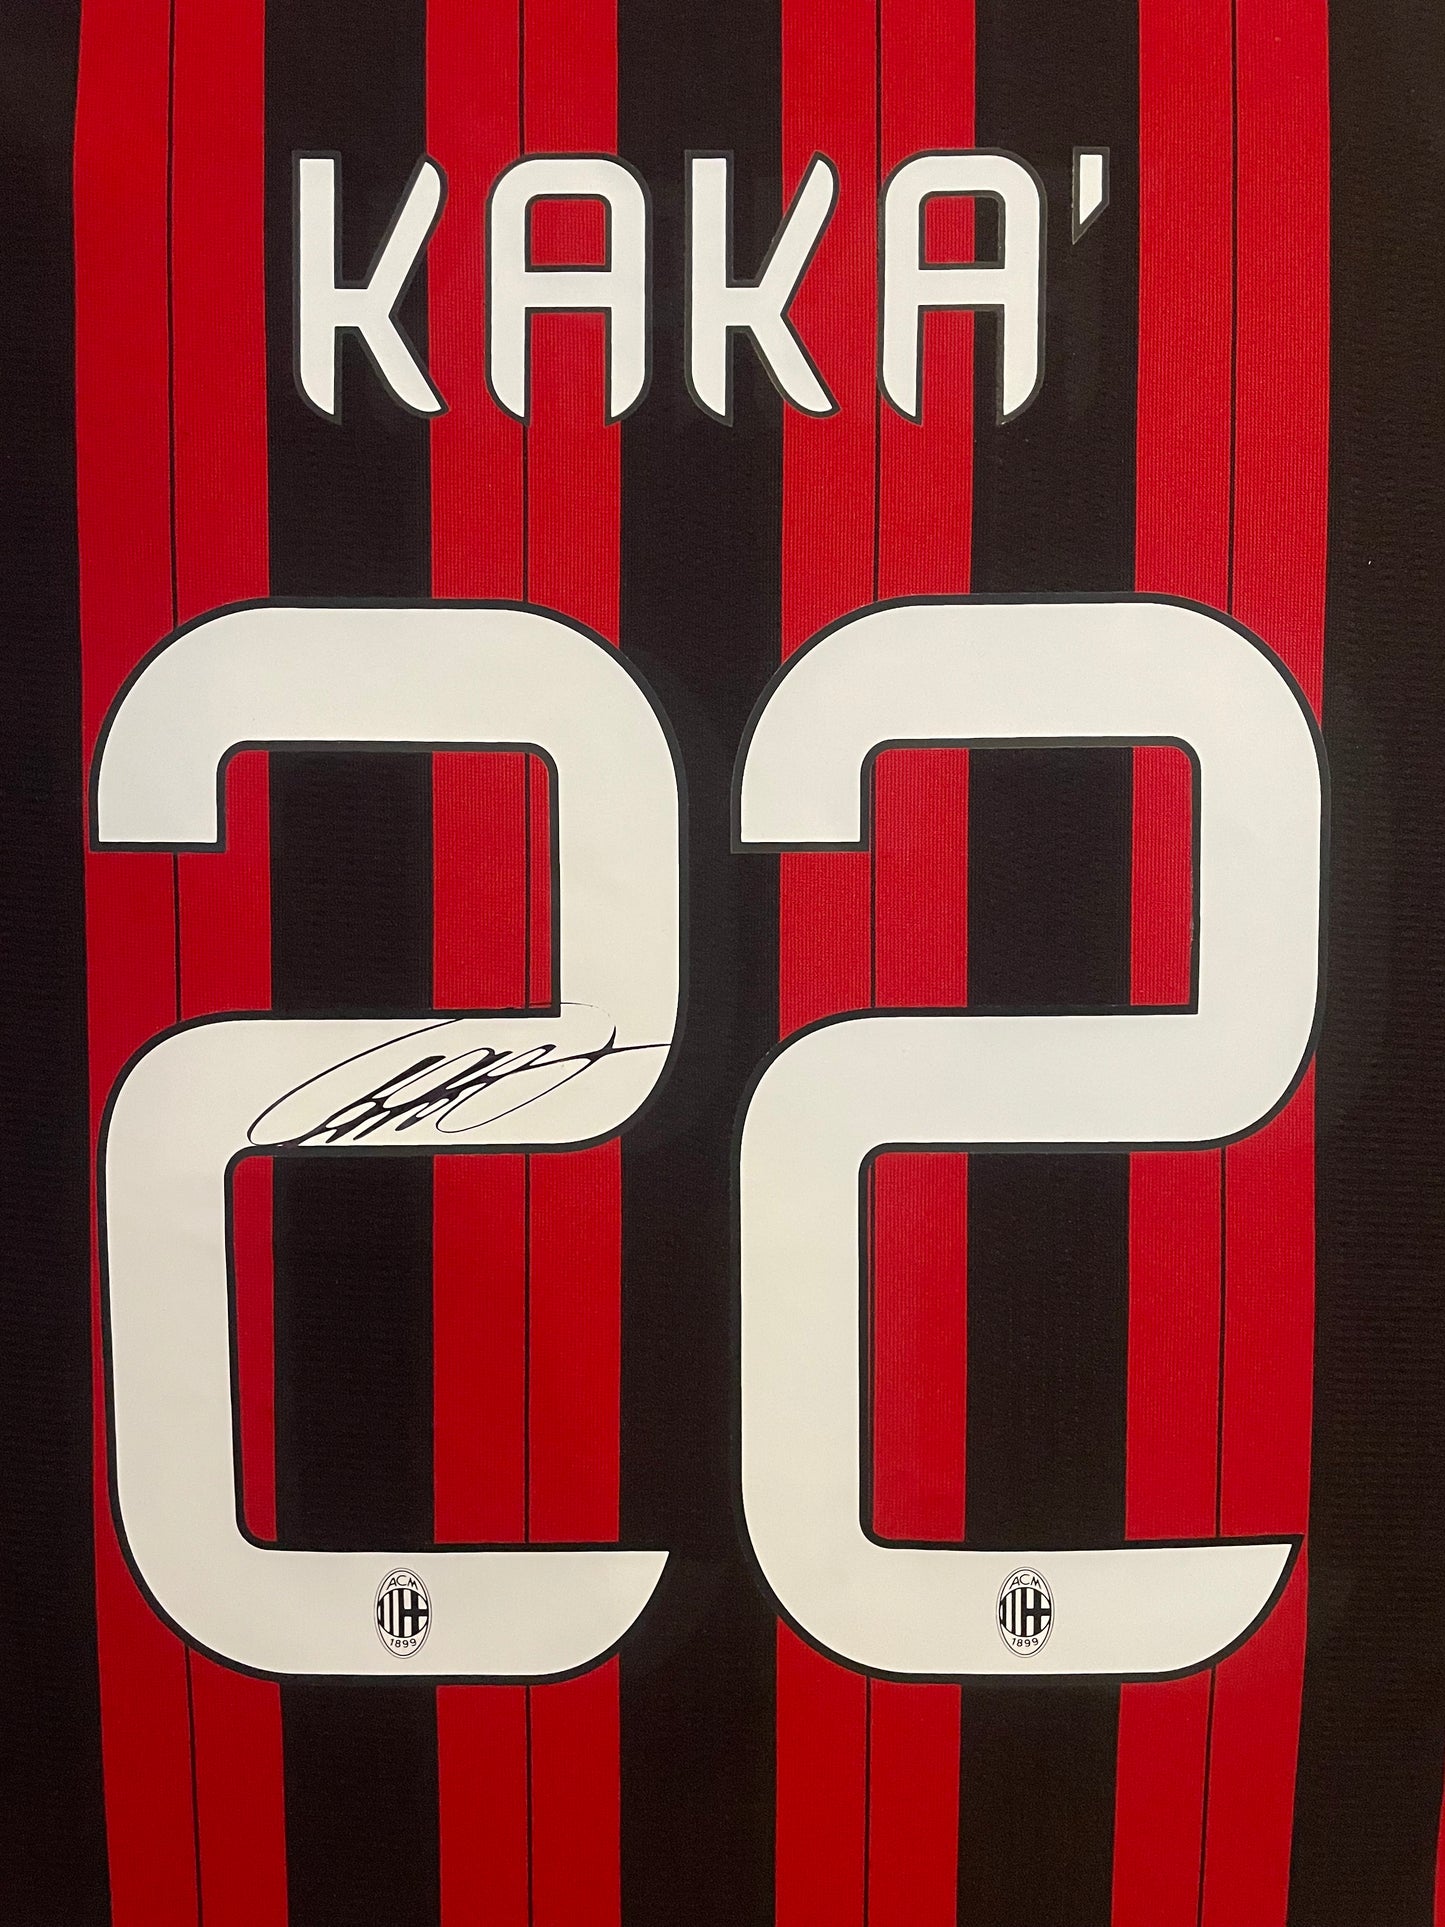 Kaka AC Milan 2013/14 Signed Framed Home Shirt with COA